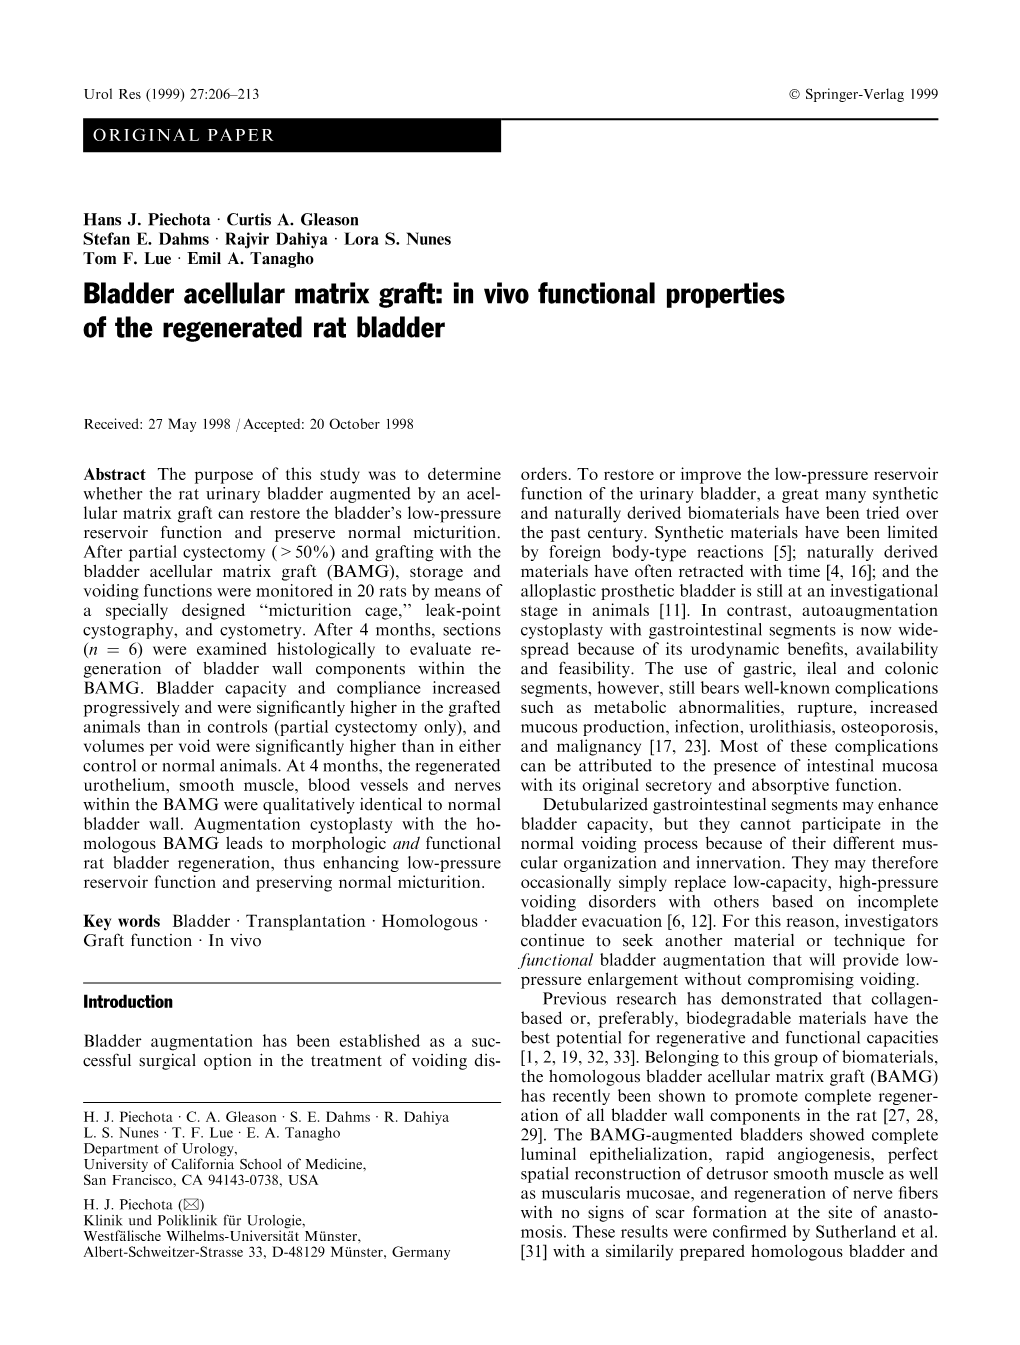 Bladder Acellular Matrix Graft: in Vivo Functional Properties of the Regenerated Rat Bladder